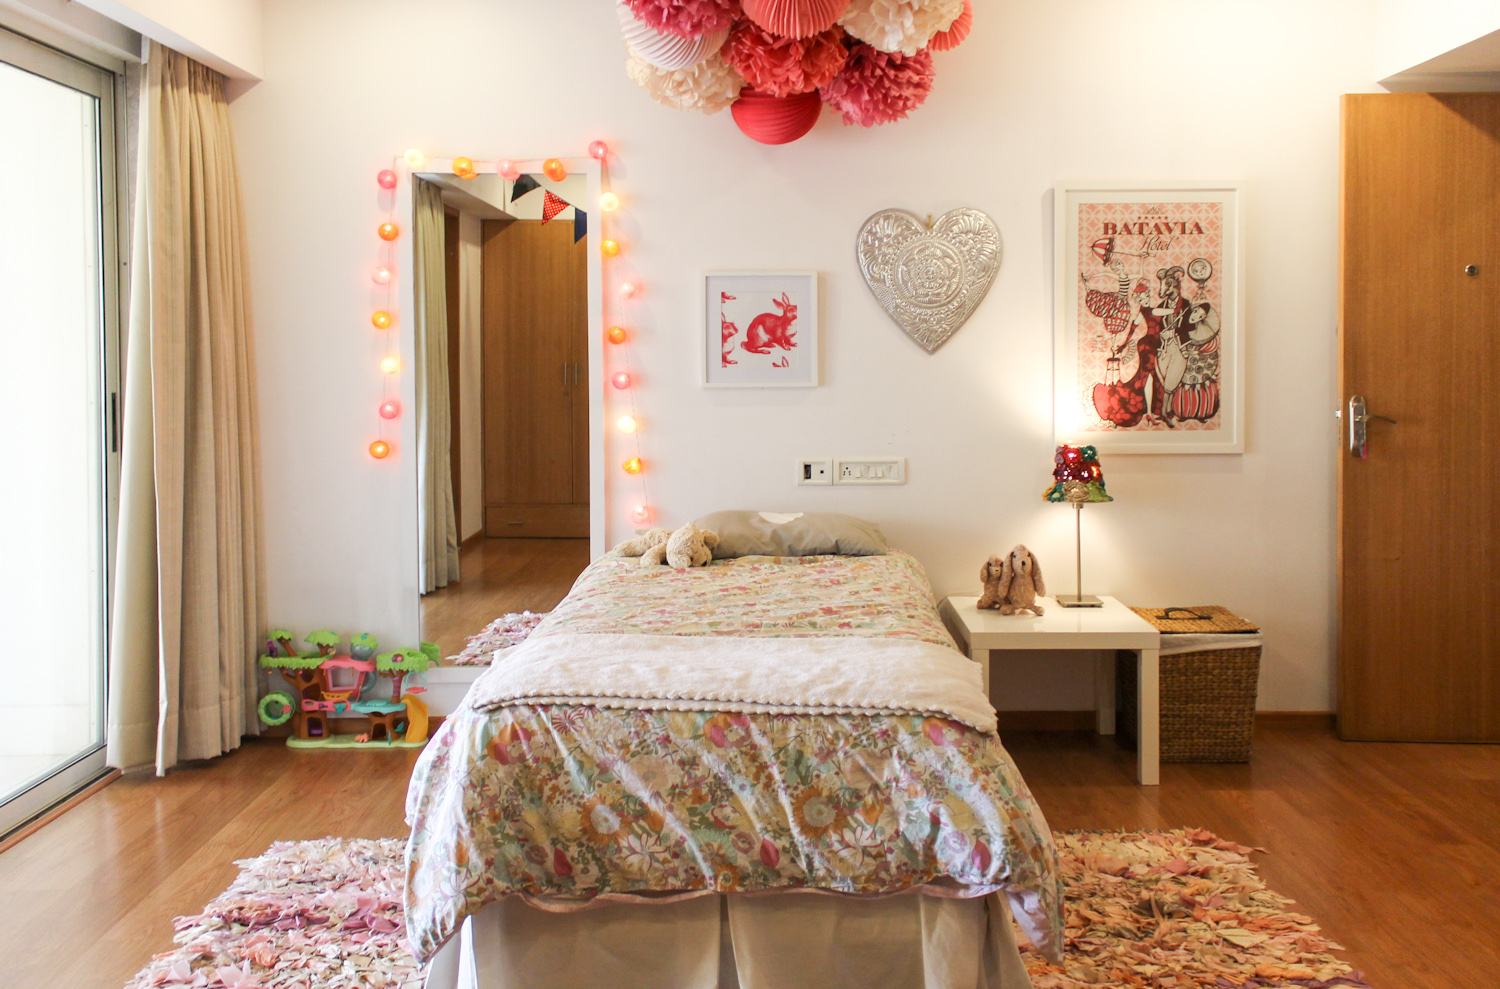 20 Best DIY Ceiling Decorations ideas  tissue pom poms, tissue paper pom  poms, chic bedroom design